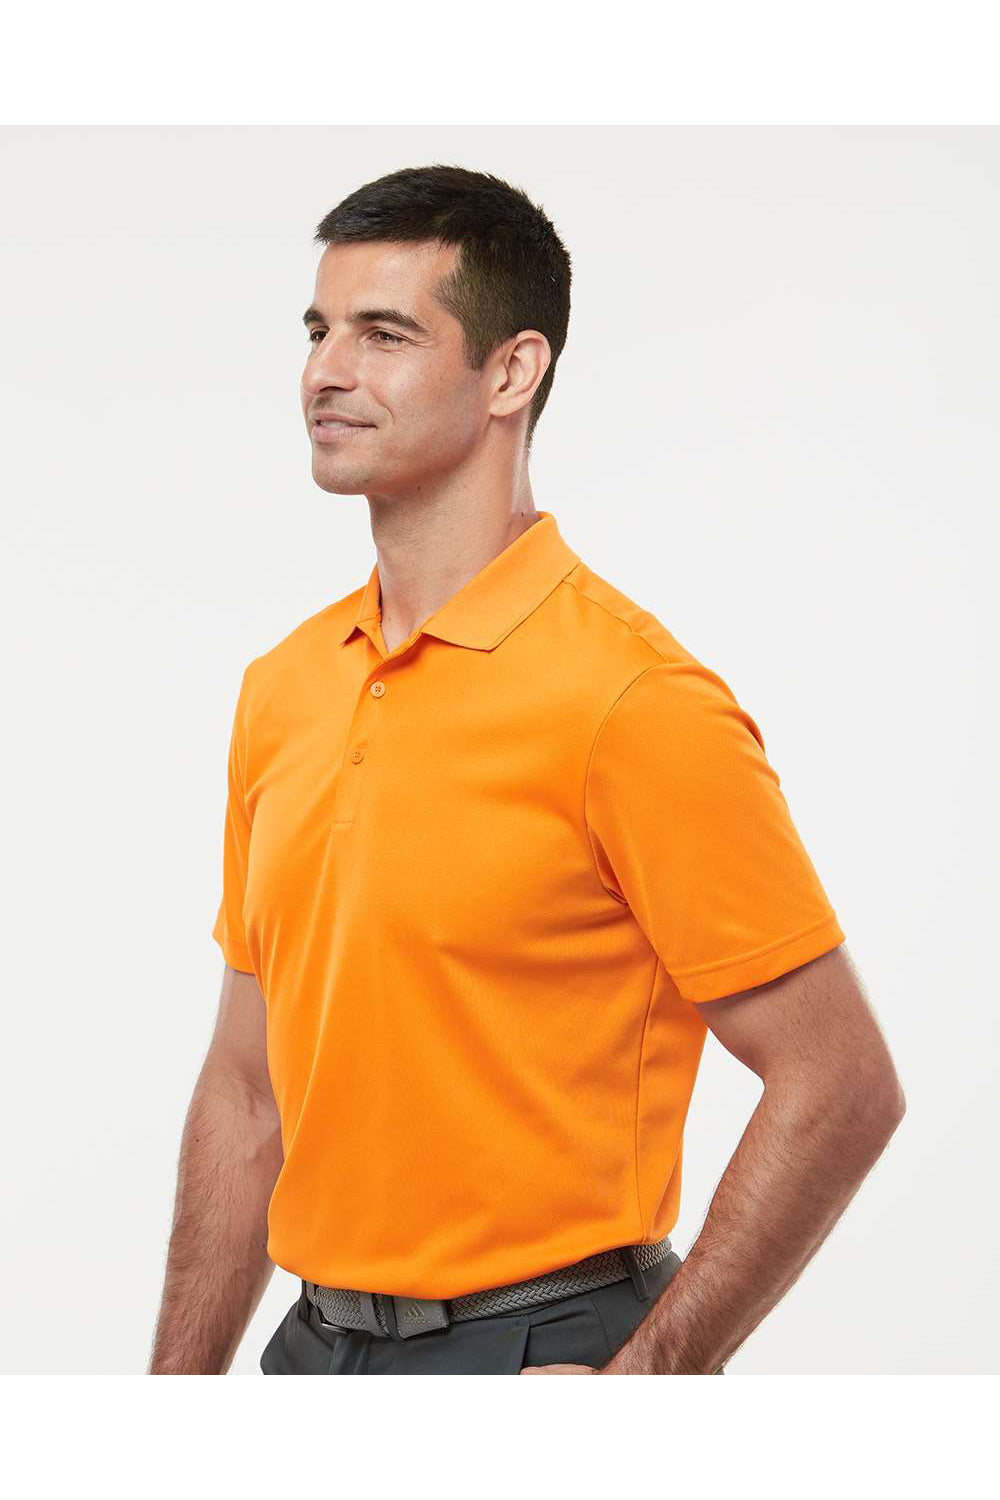 Adidas A430 Mens Basic Short Sleeve Polo Shirt Bright Orange Model Side